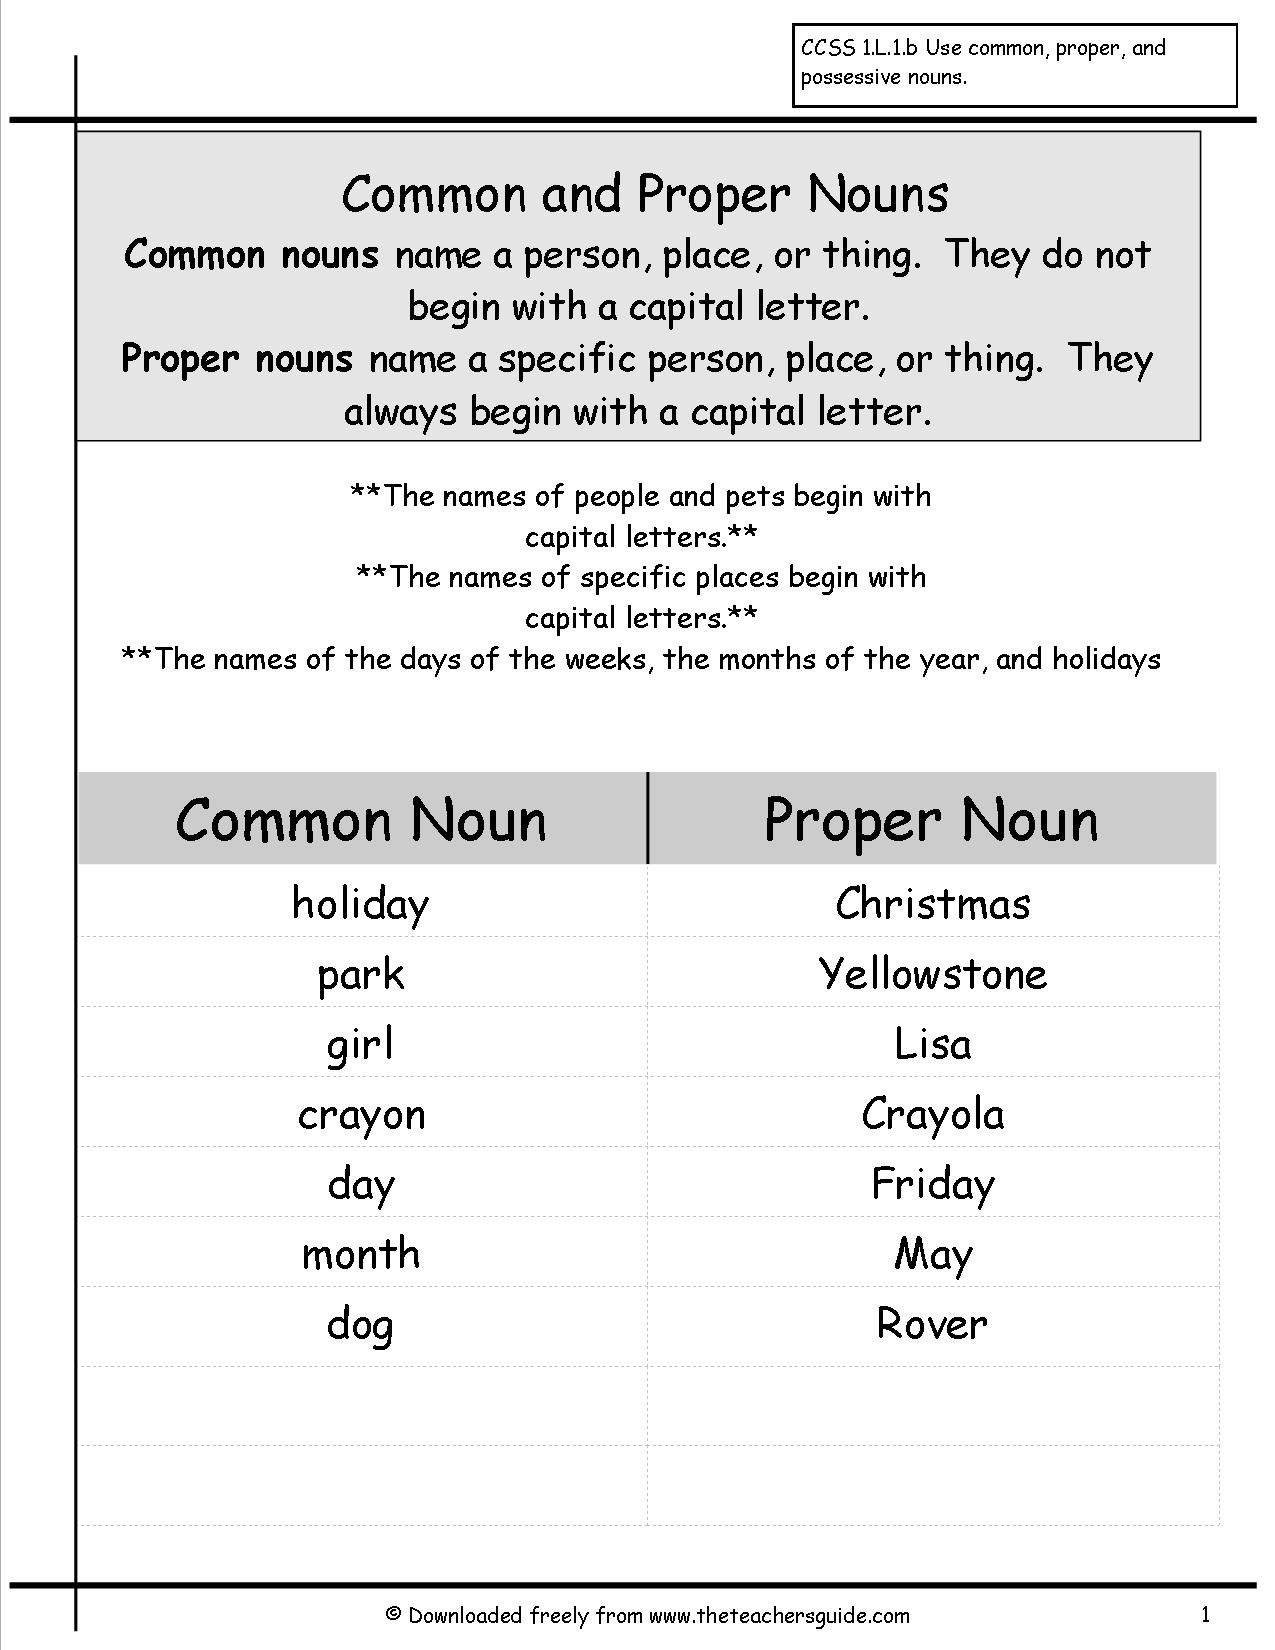 18 Common And Proper Noun Sort Worksheet / worksheeto com